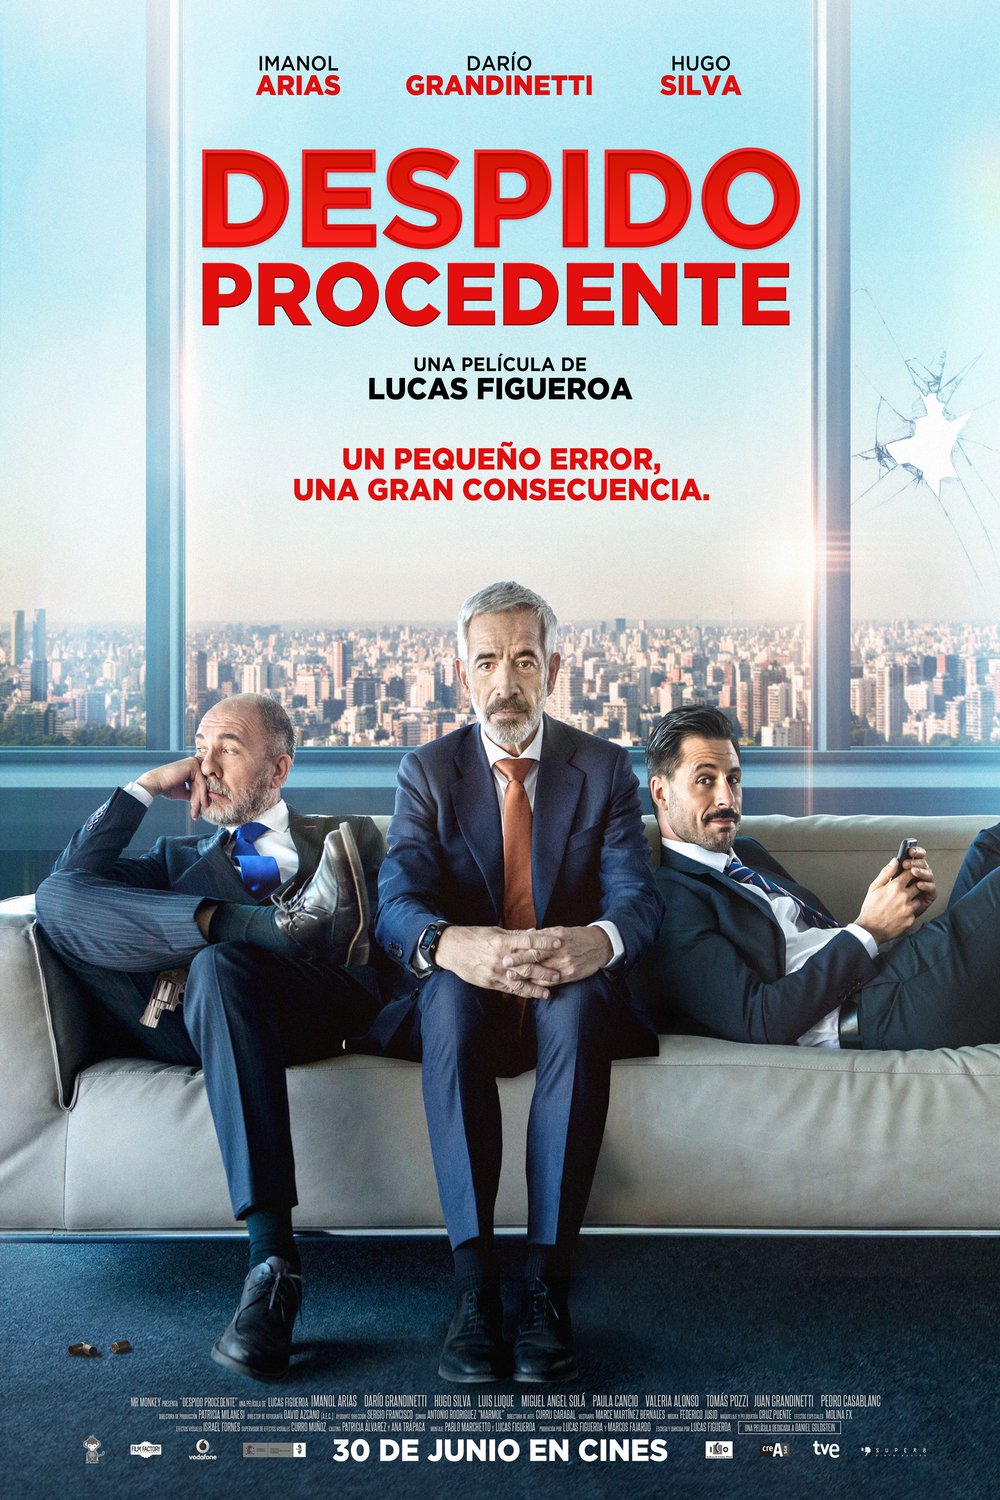 Spanish poster of the movie Despido procedente